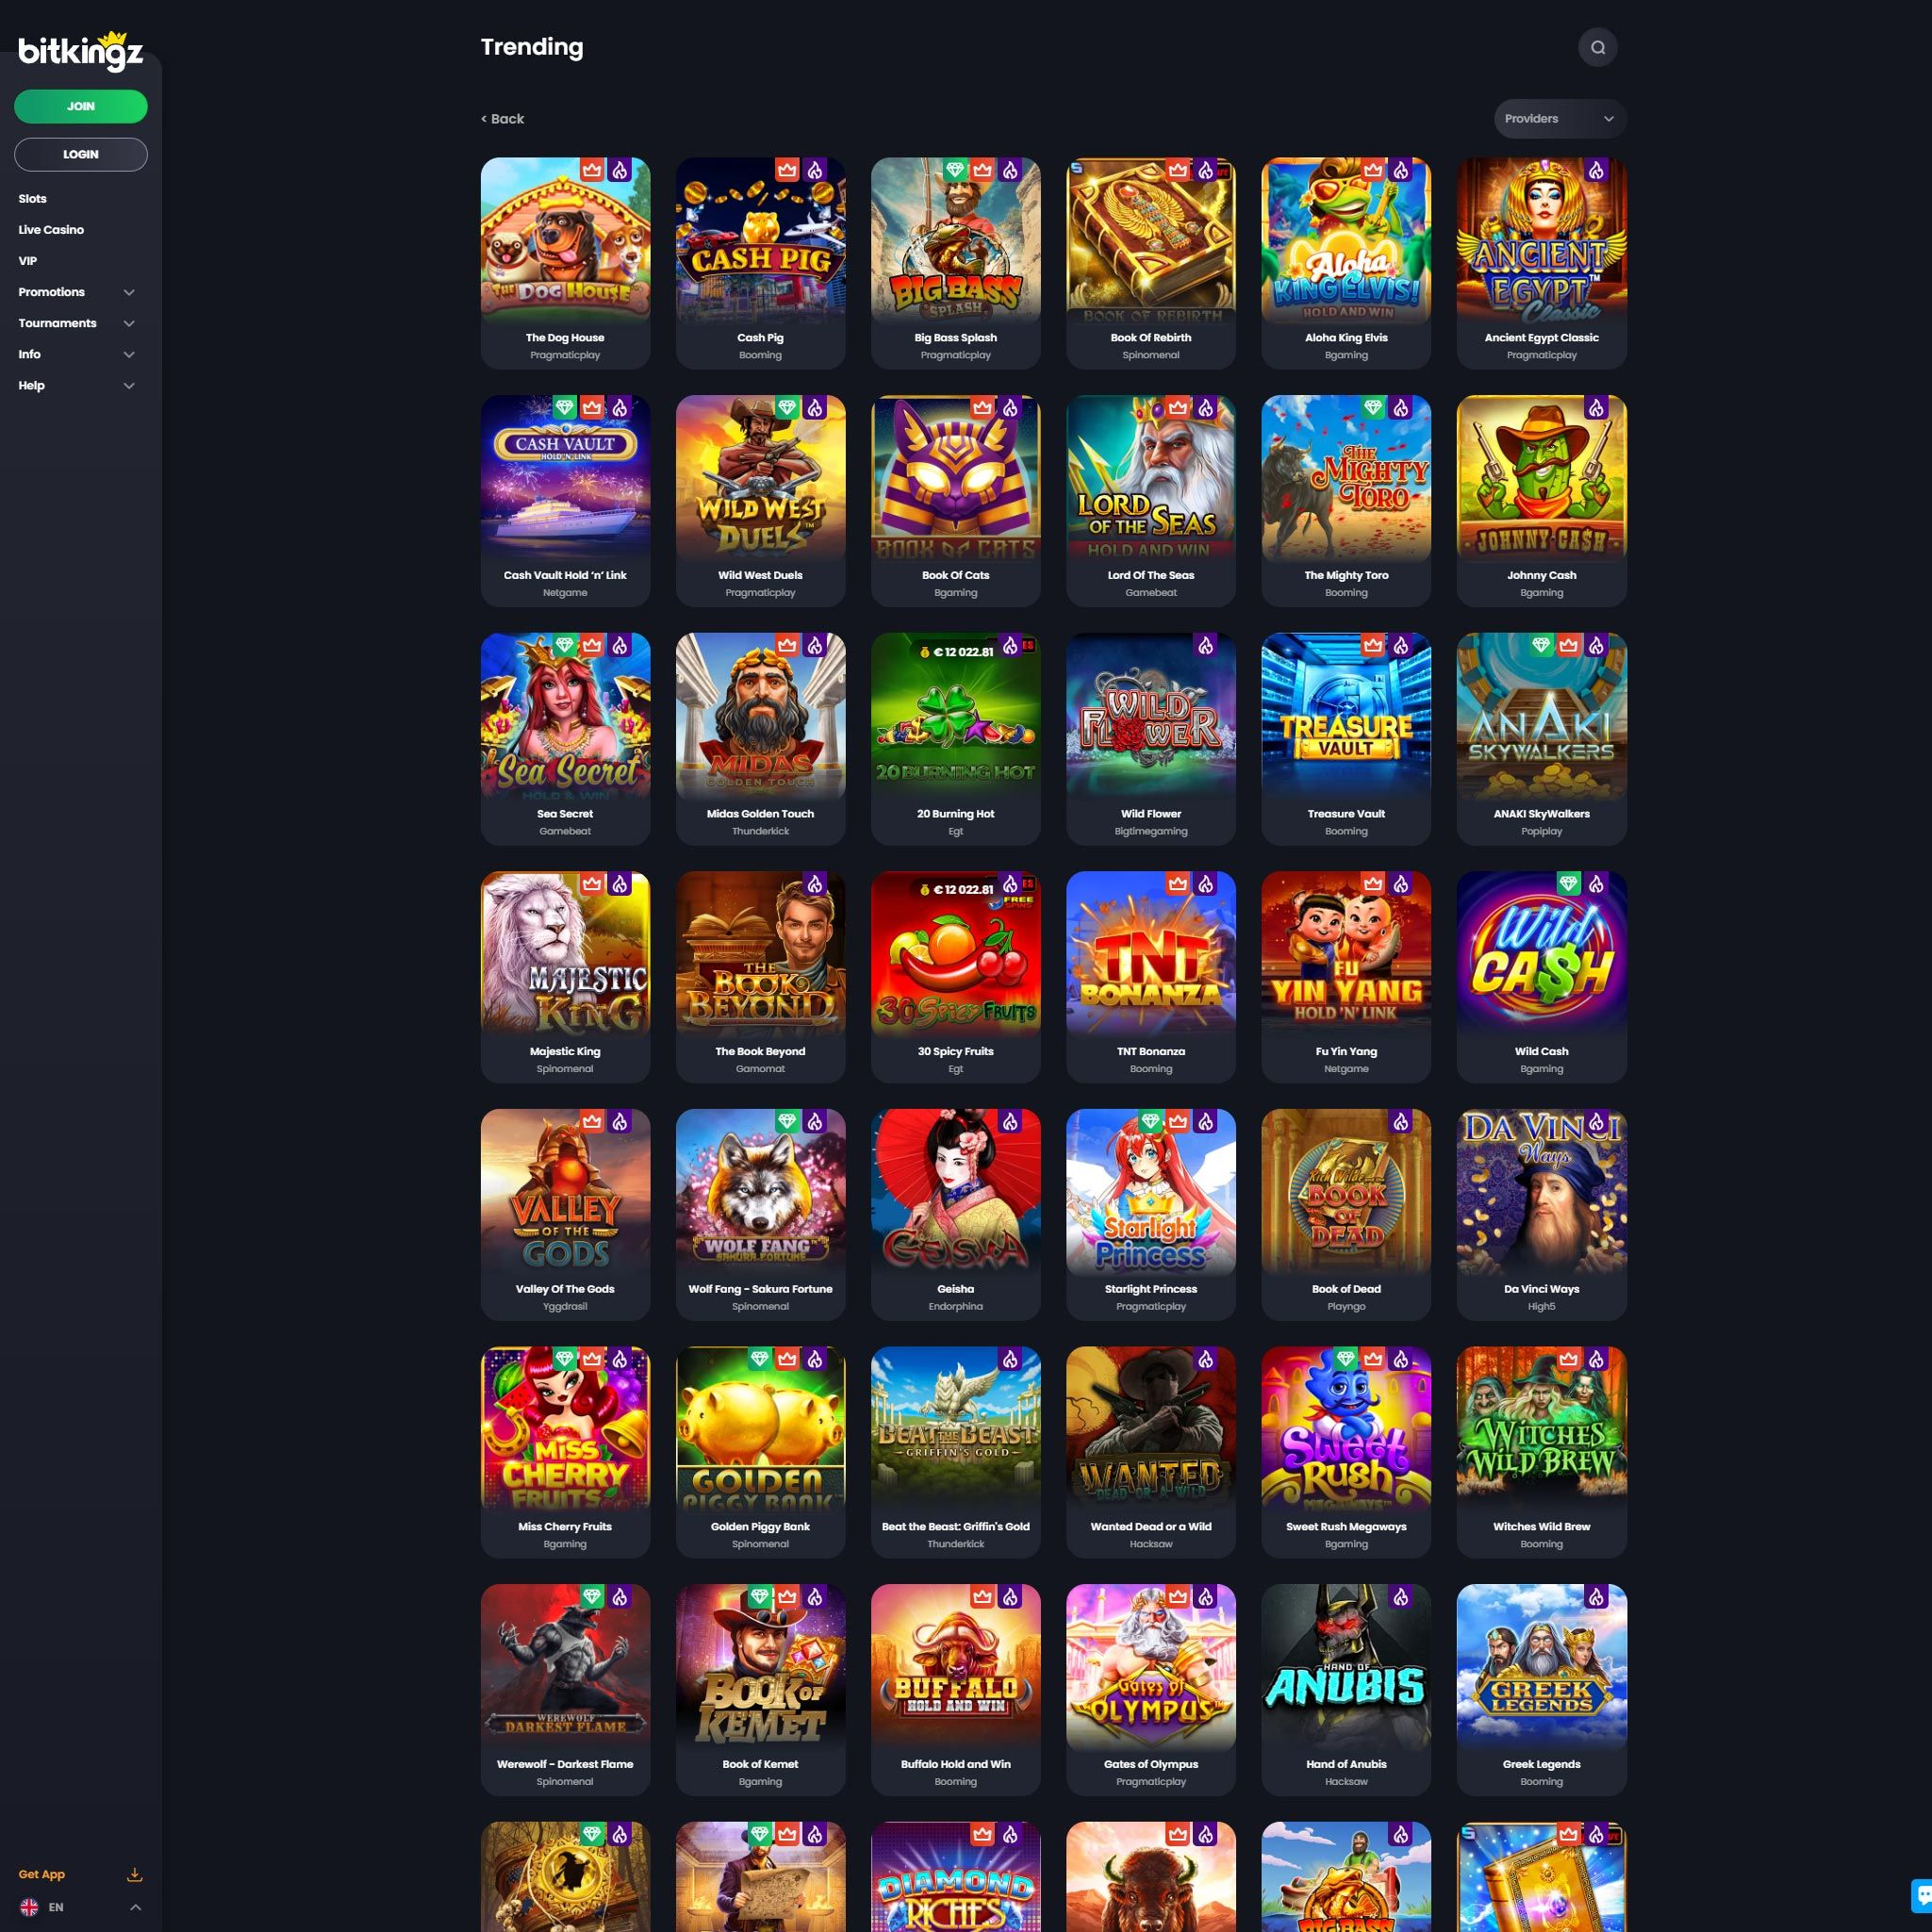 Bitkingz Casino full games catalogue